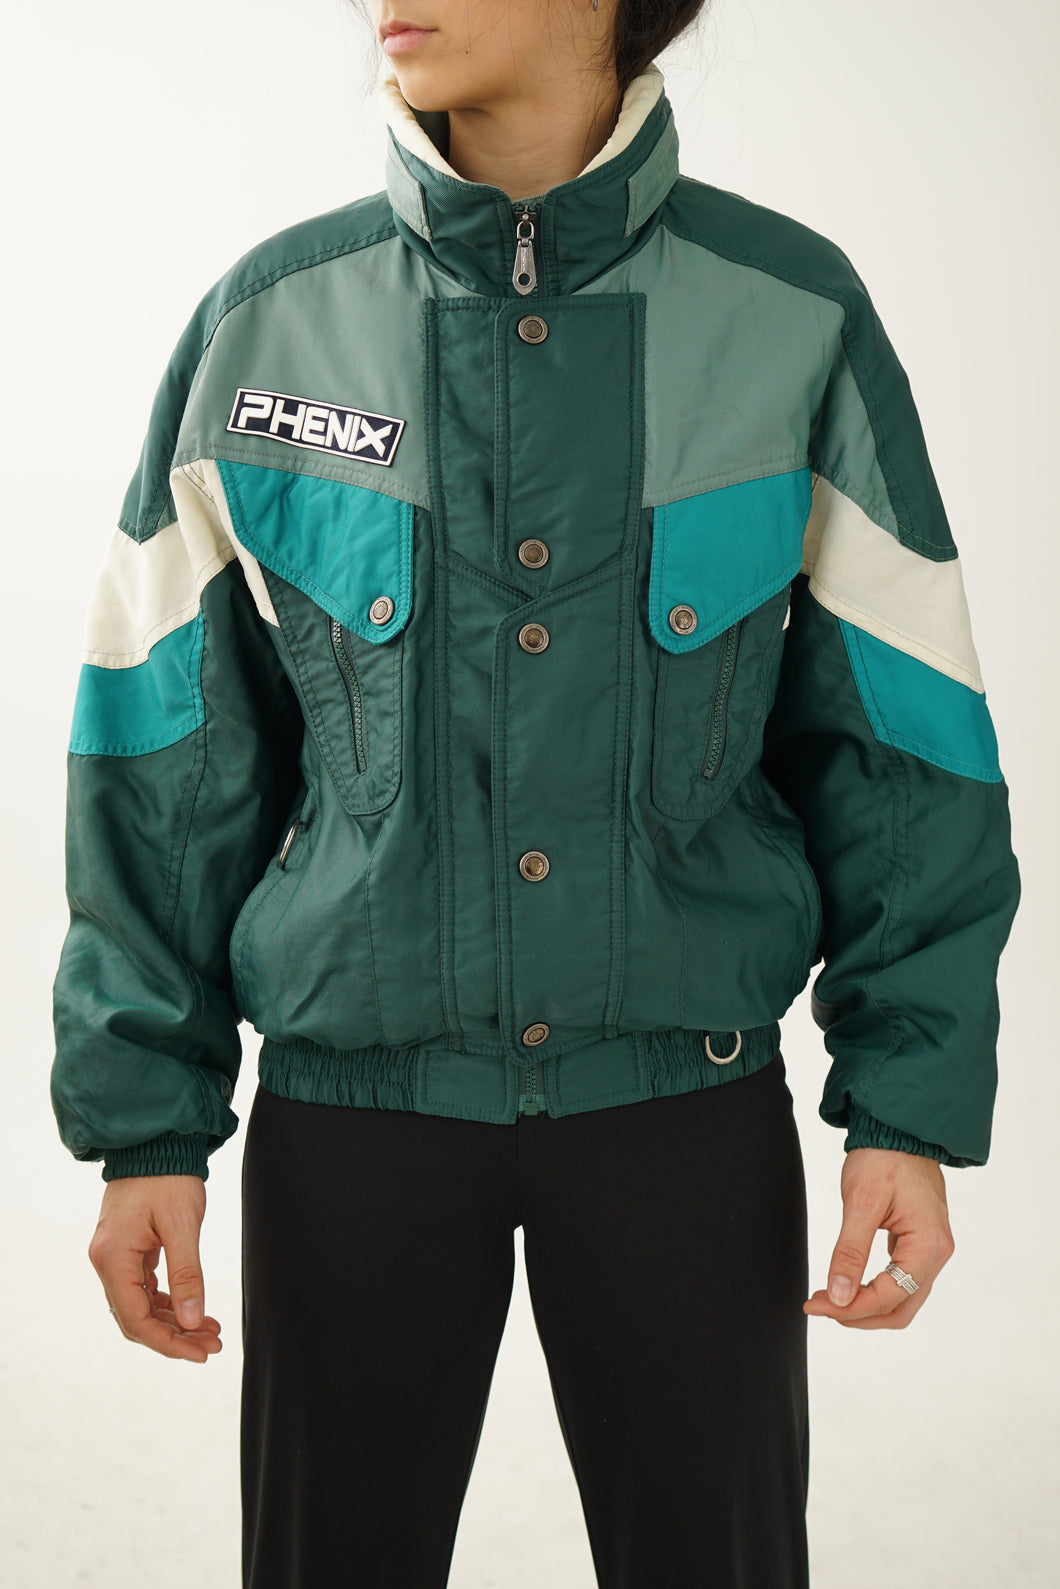 Phenix ski jacket for women size 18